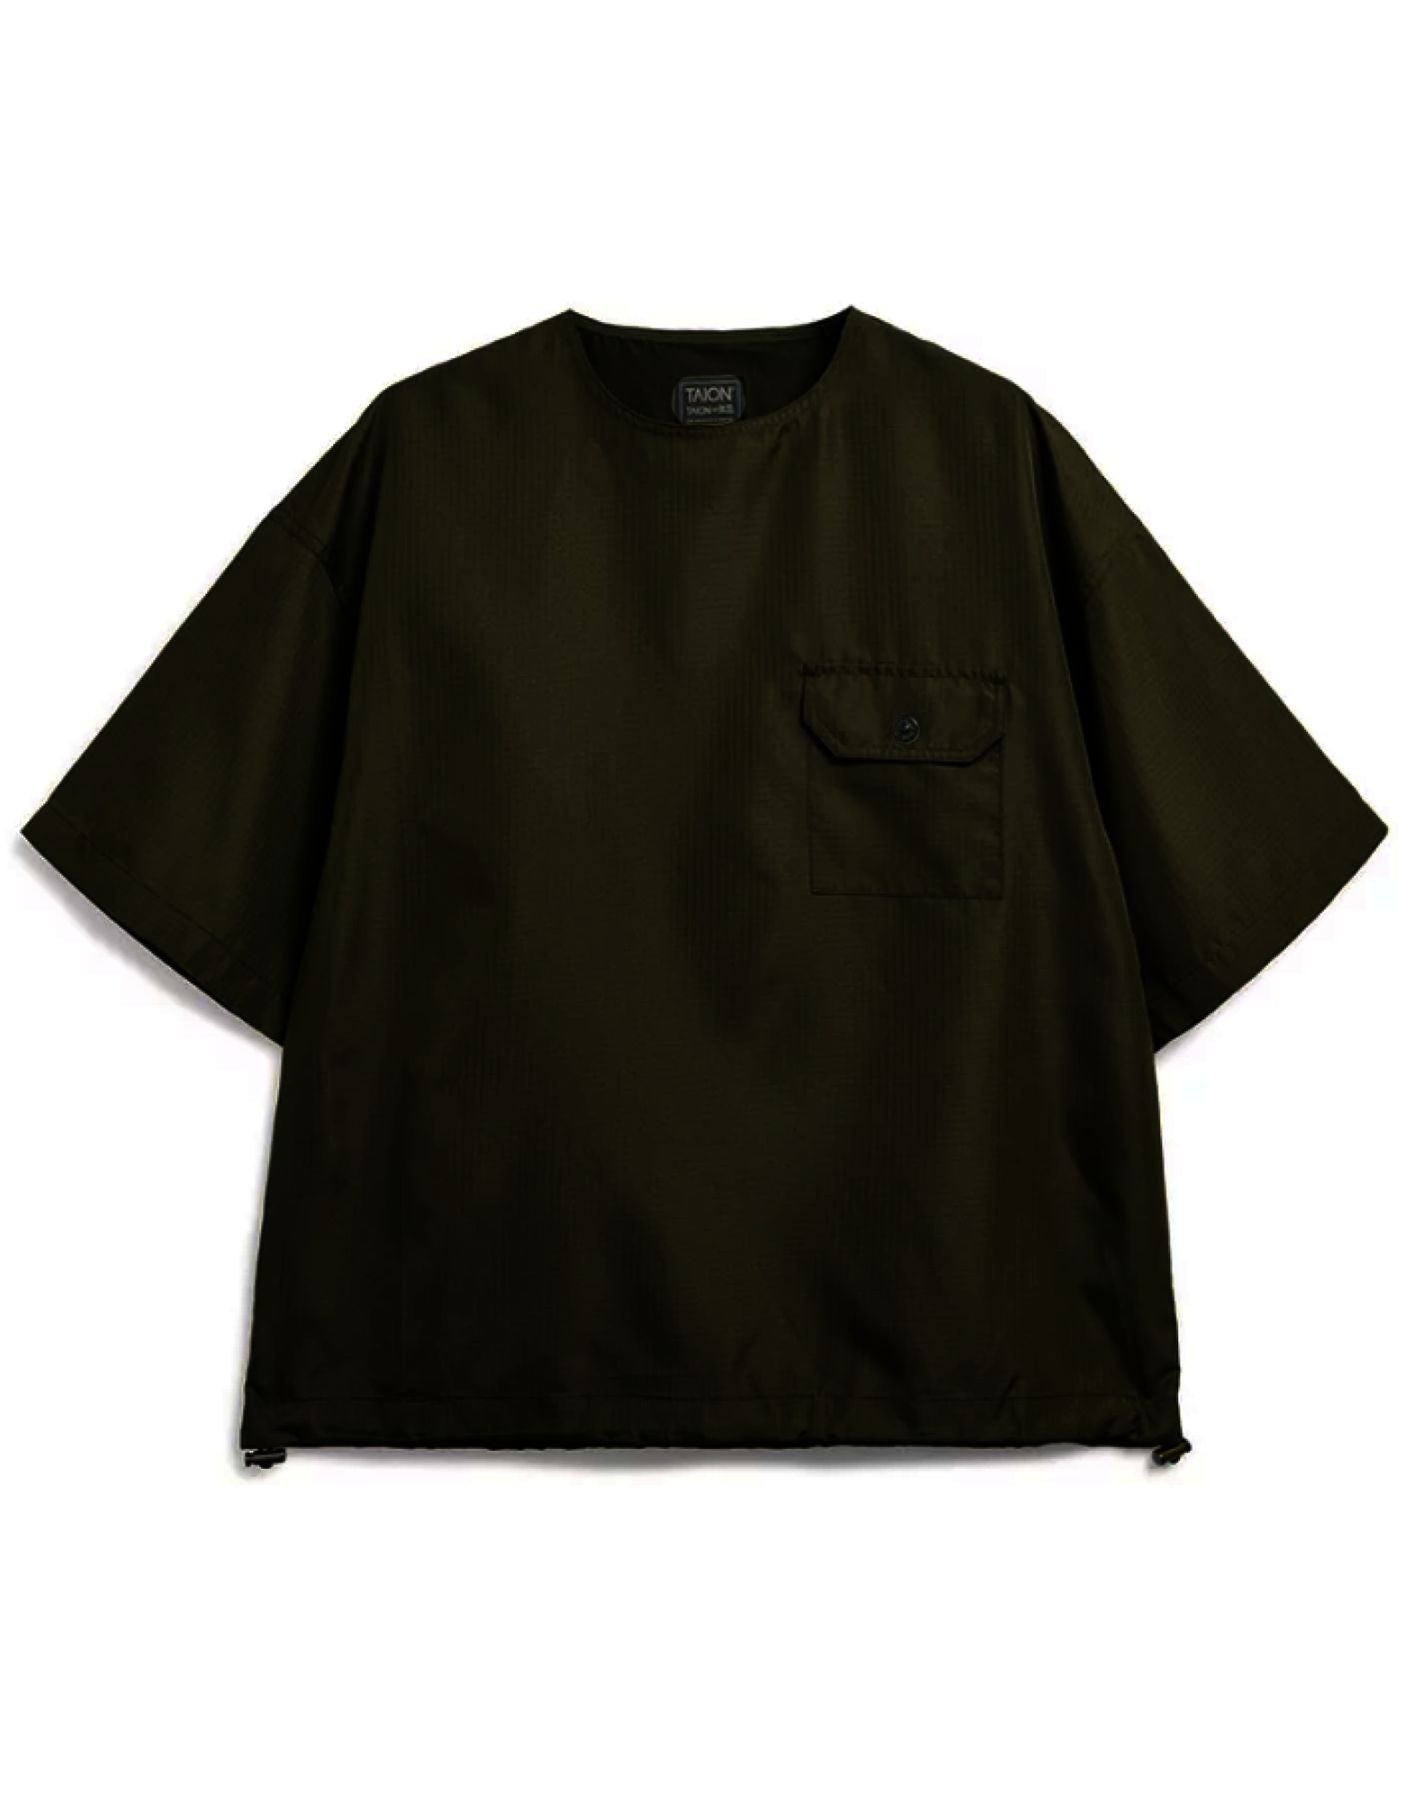 Camiseta hombre CS02ndml Black Taion